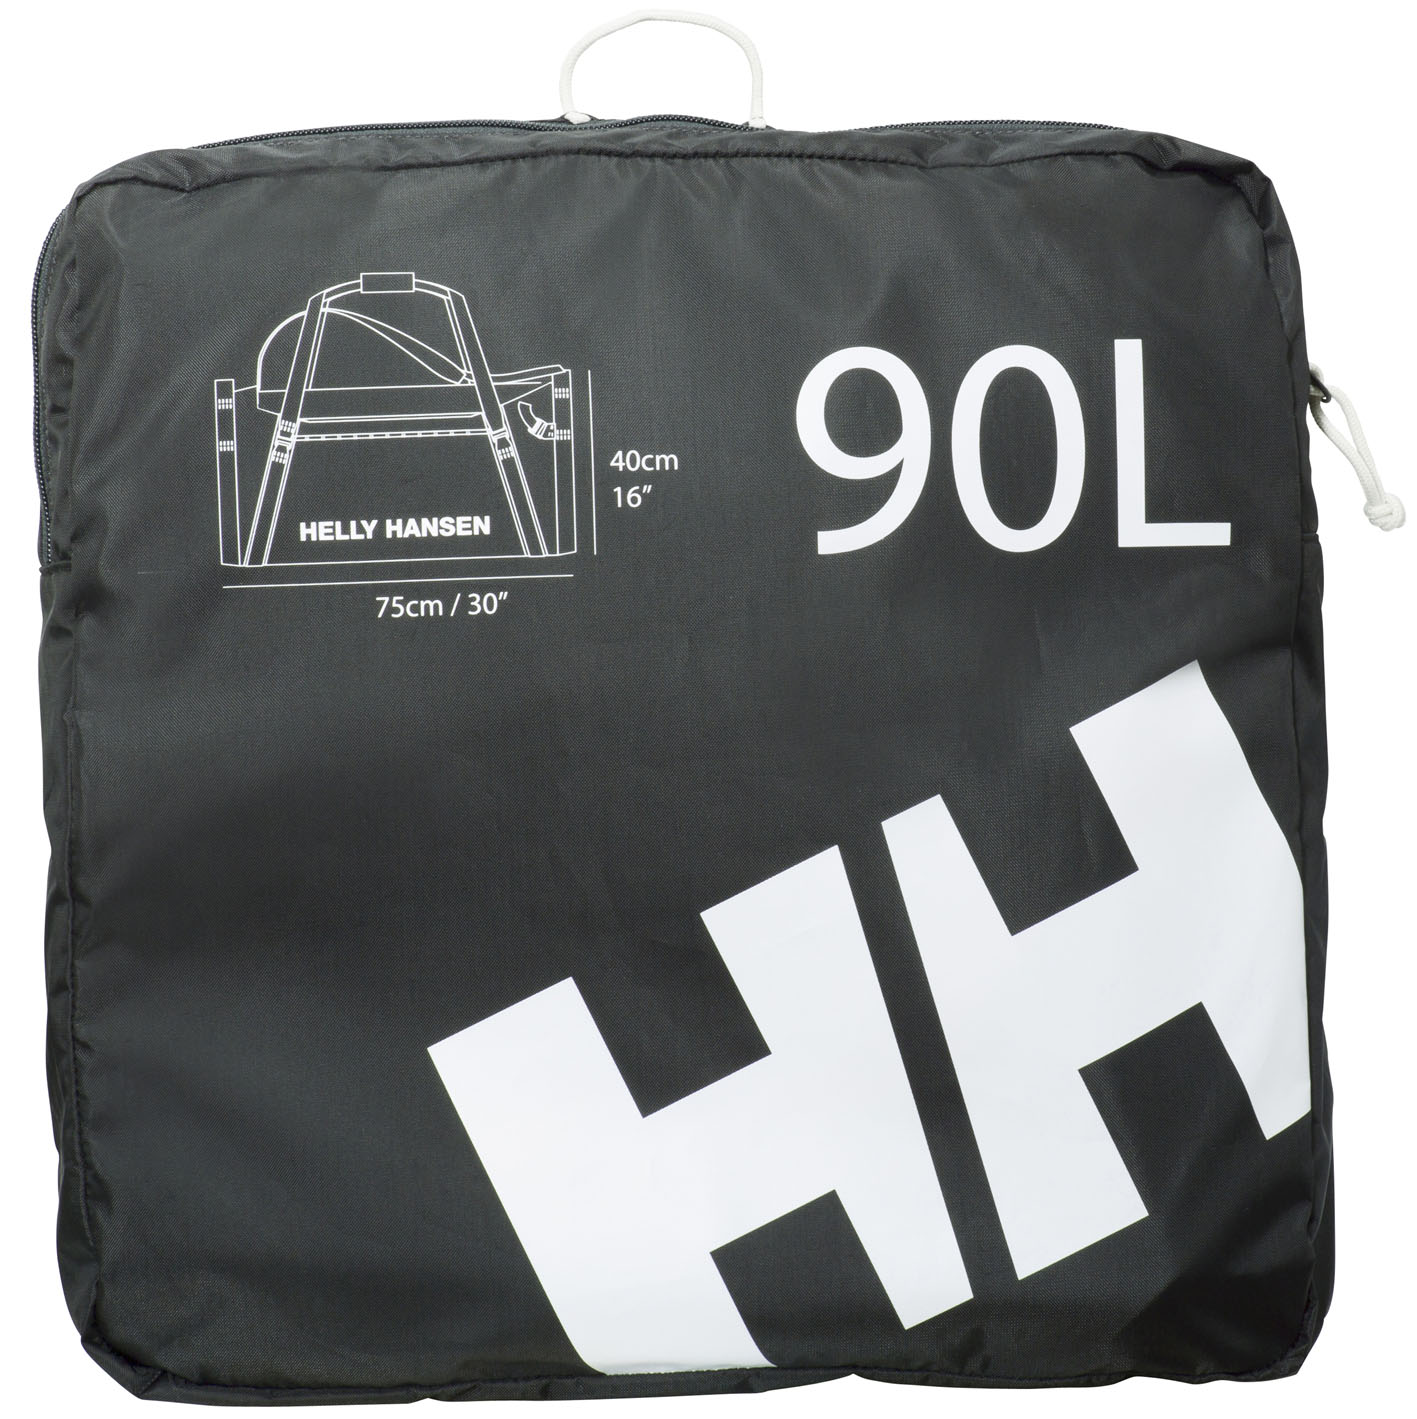 Helly Hansen Duffel Bag 2 90l schwarz